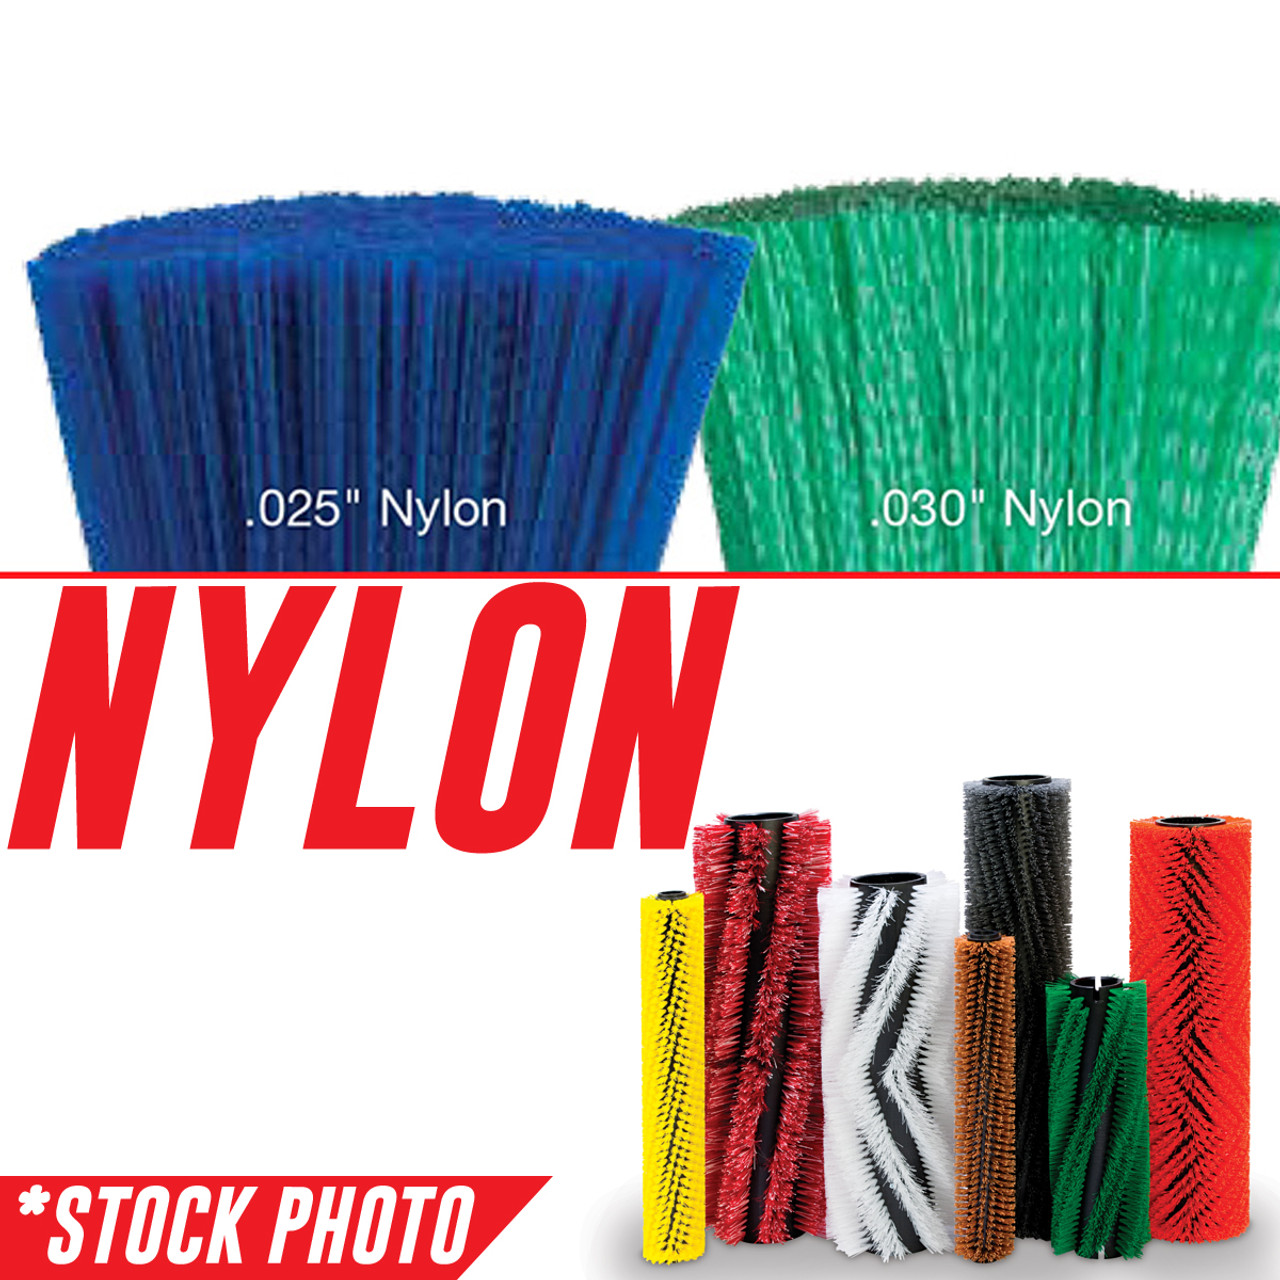 222308: 32" Cylindrical Brush 18 Single Row Soft Nylon fits Tennant Models 5700-800C, 7100 32", T5, T7 32"